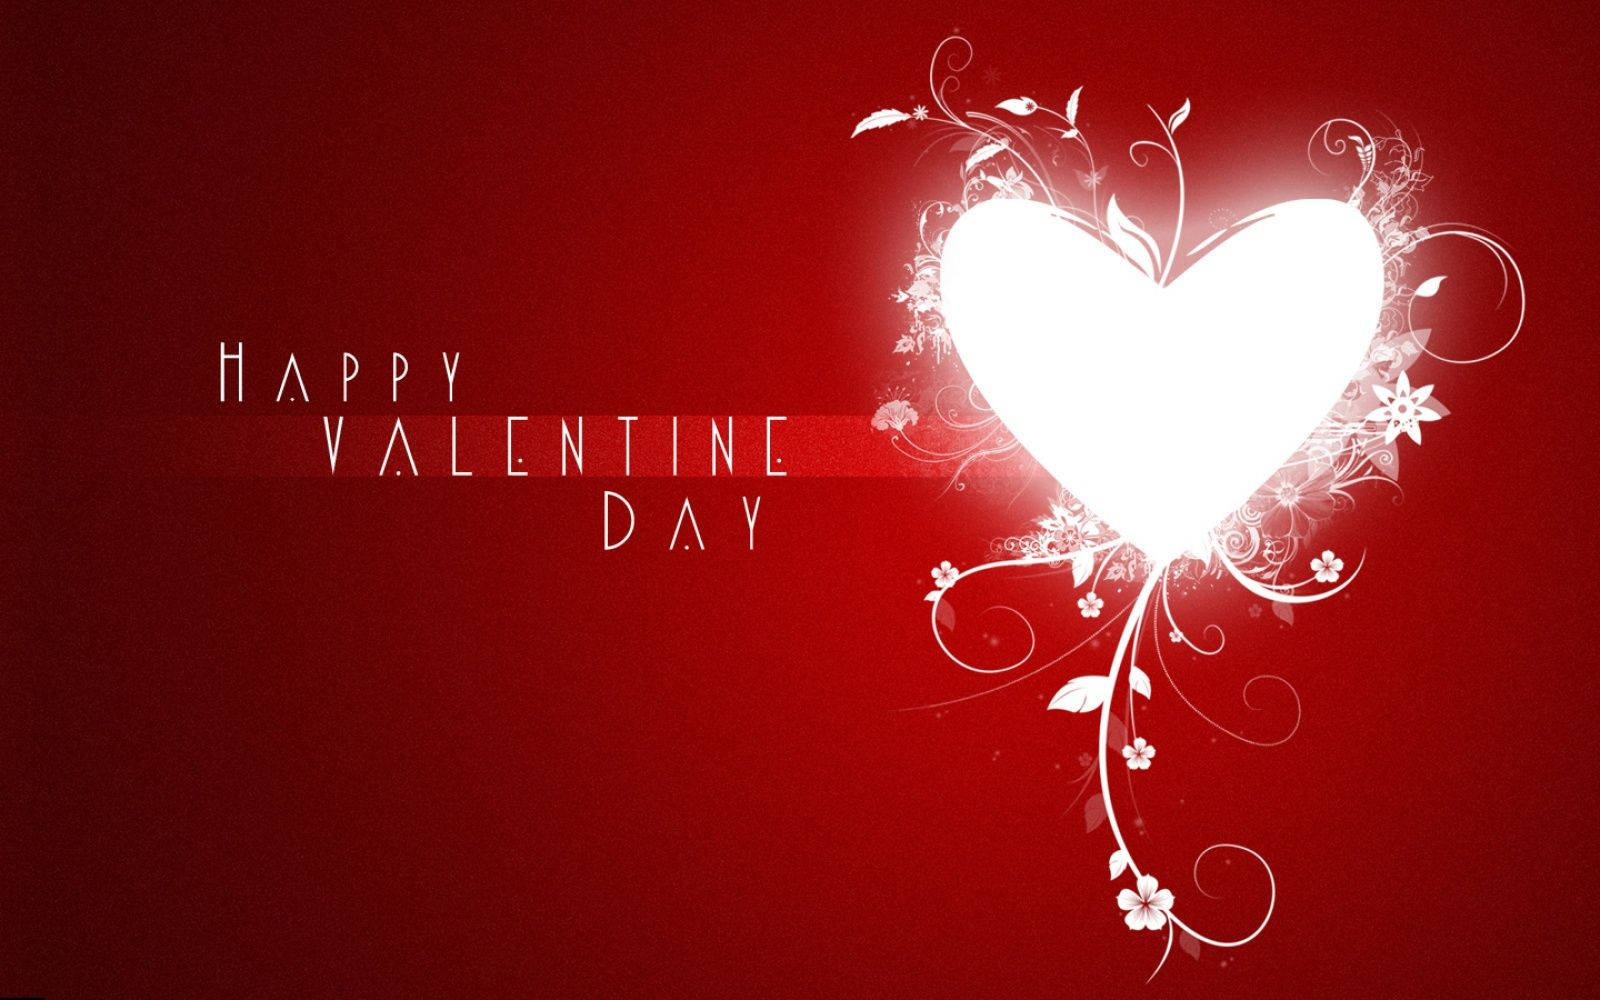 Illuminated Heart With Valentine's Greeting Desktop Background